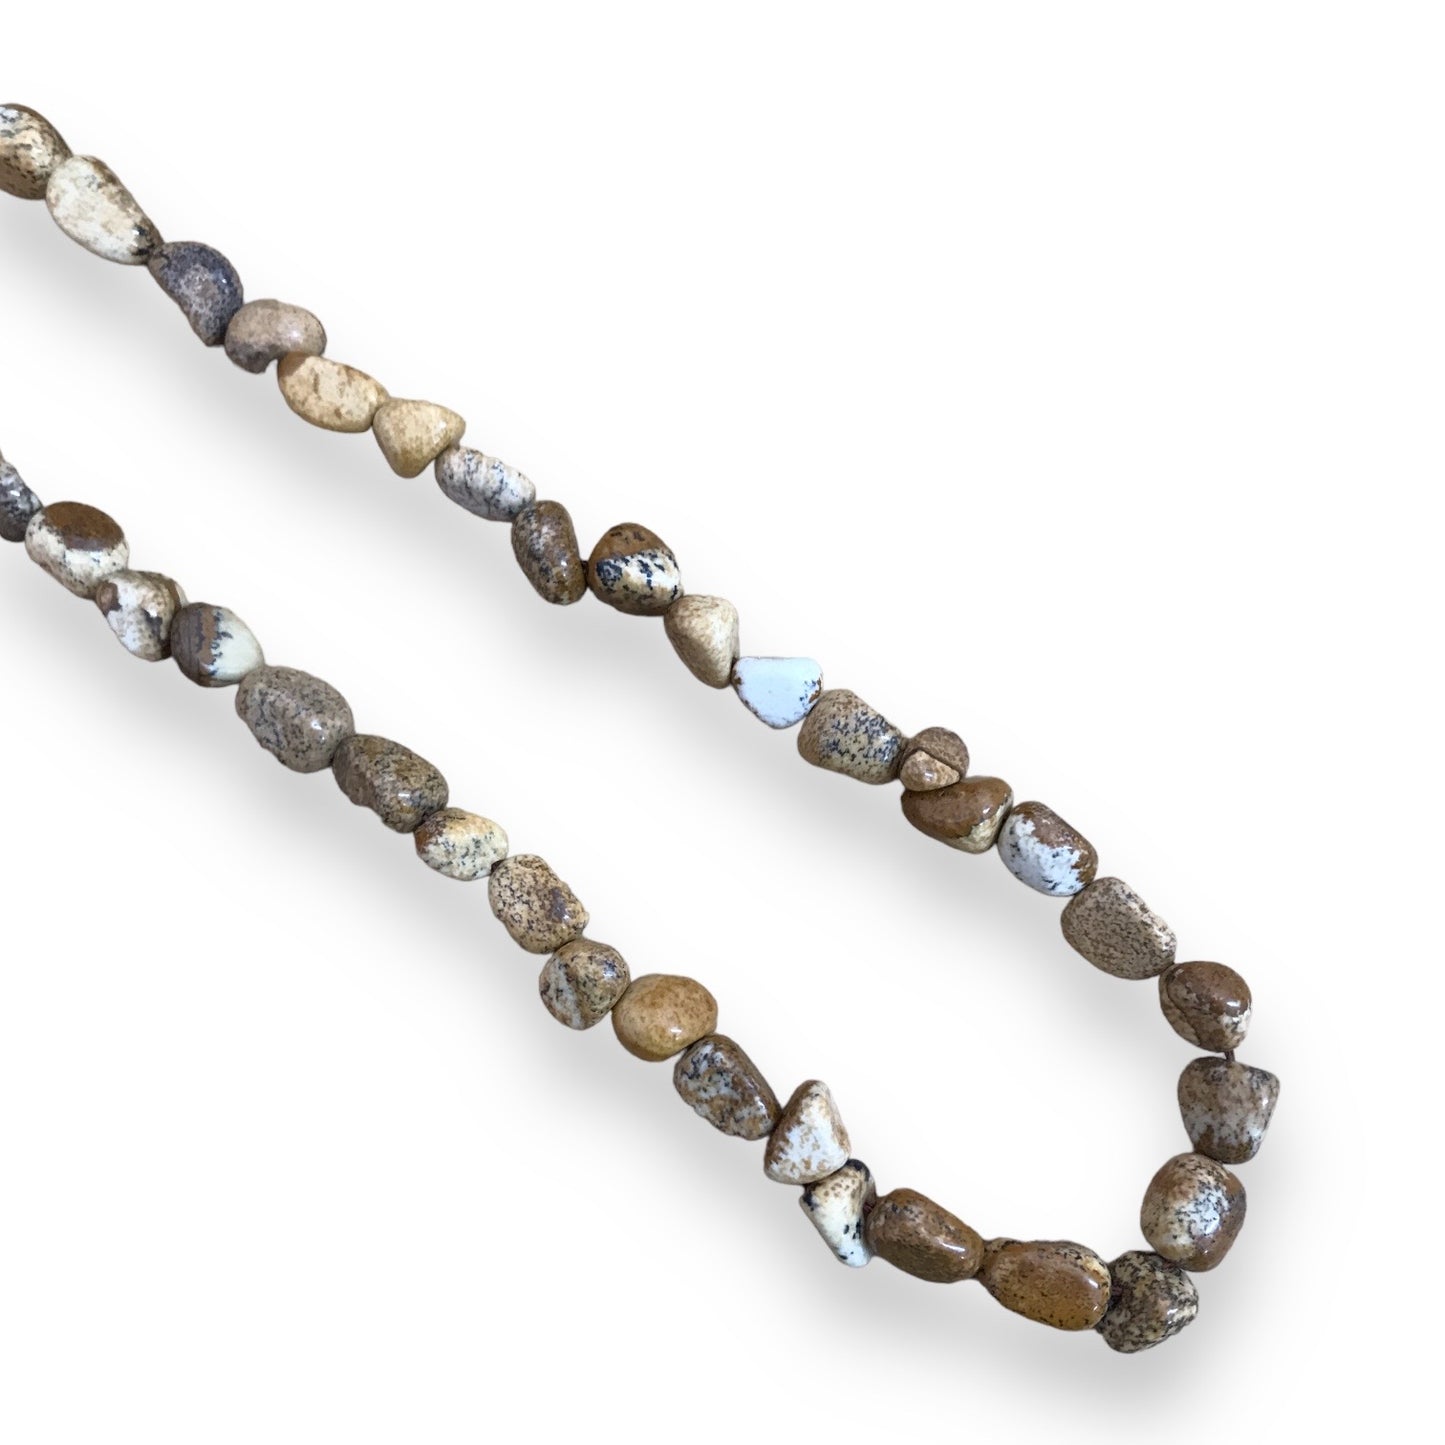 Assorted Gemstone Pebble Bead String-35cm